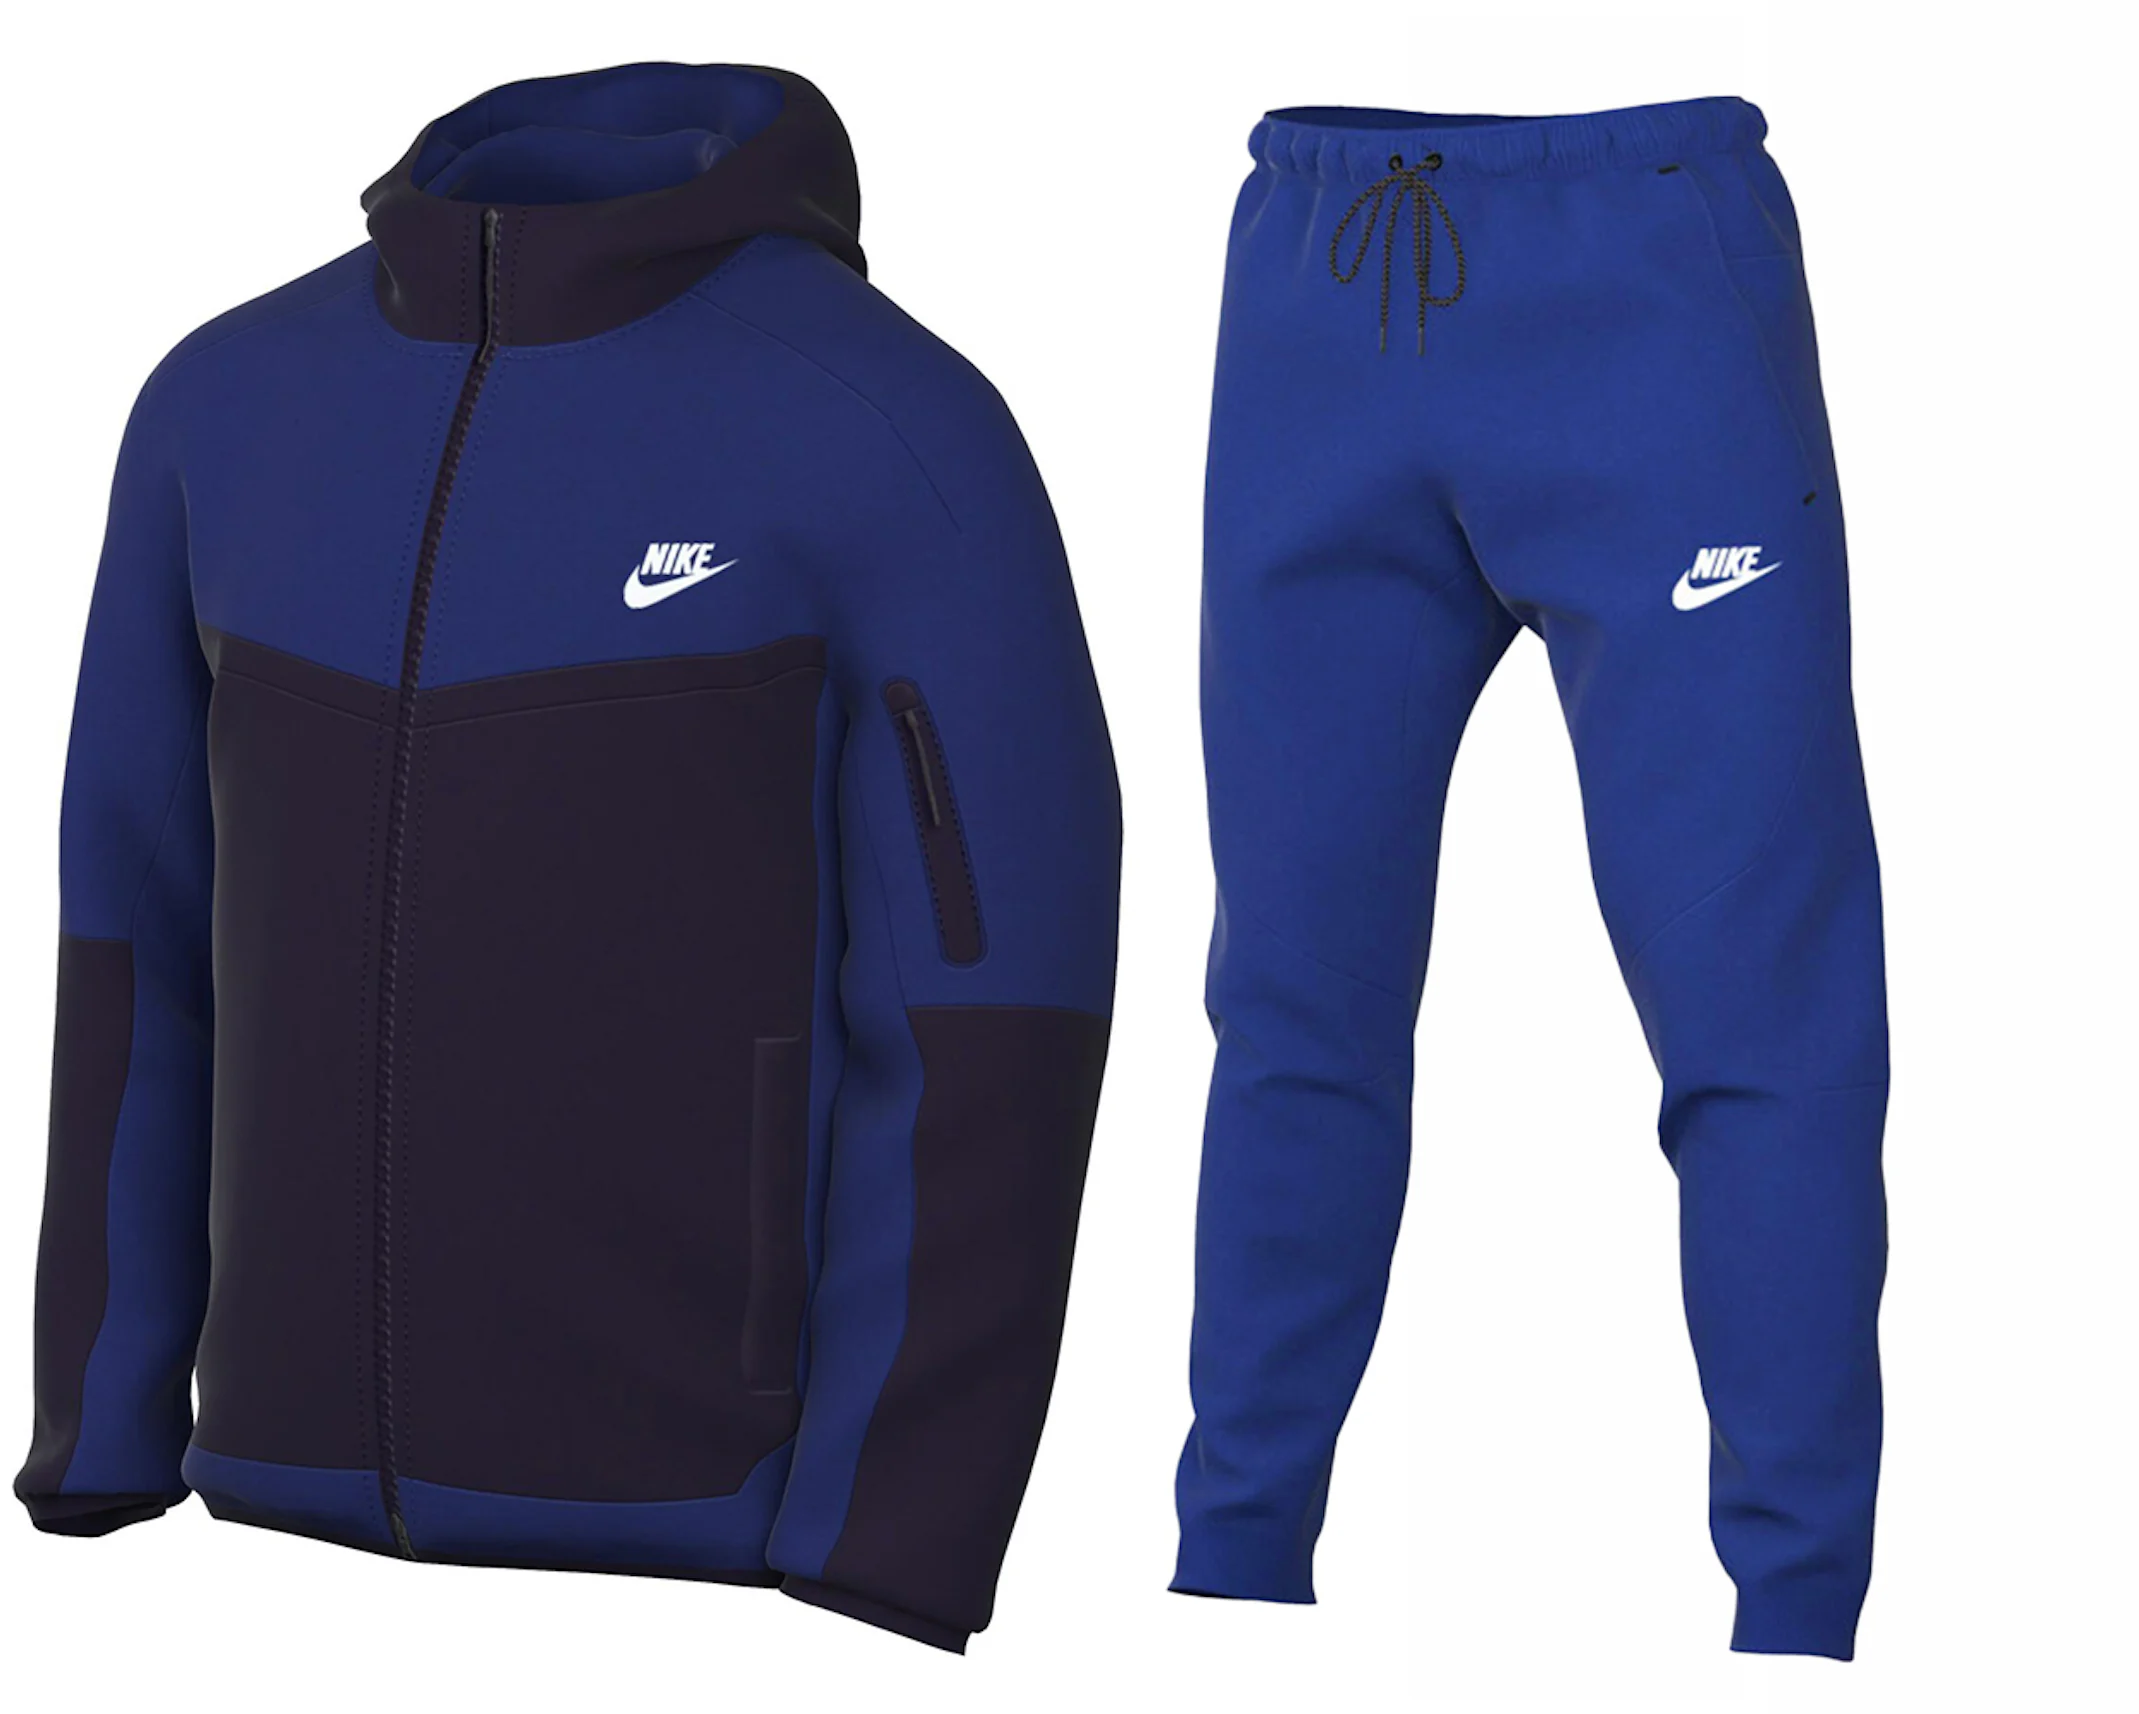 https://images.stockx.com/images/Nike-Sportswear-Tech-Fleece-Full-Zip-Hoodie-Joggers-Set-Old-Royal-Charcoal-Grey-Deep-Royal-Blue.jpg?fit=fill&bg=FFFFFF&w=1200&h=857&fm=webp&auto=compress&dpr=2&trim=color&updated_at=1707833464&q=60